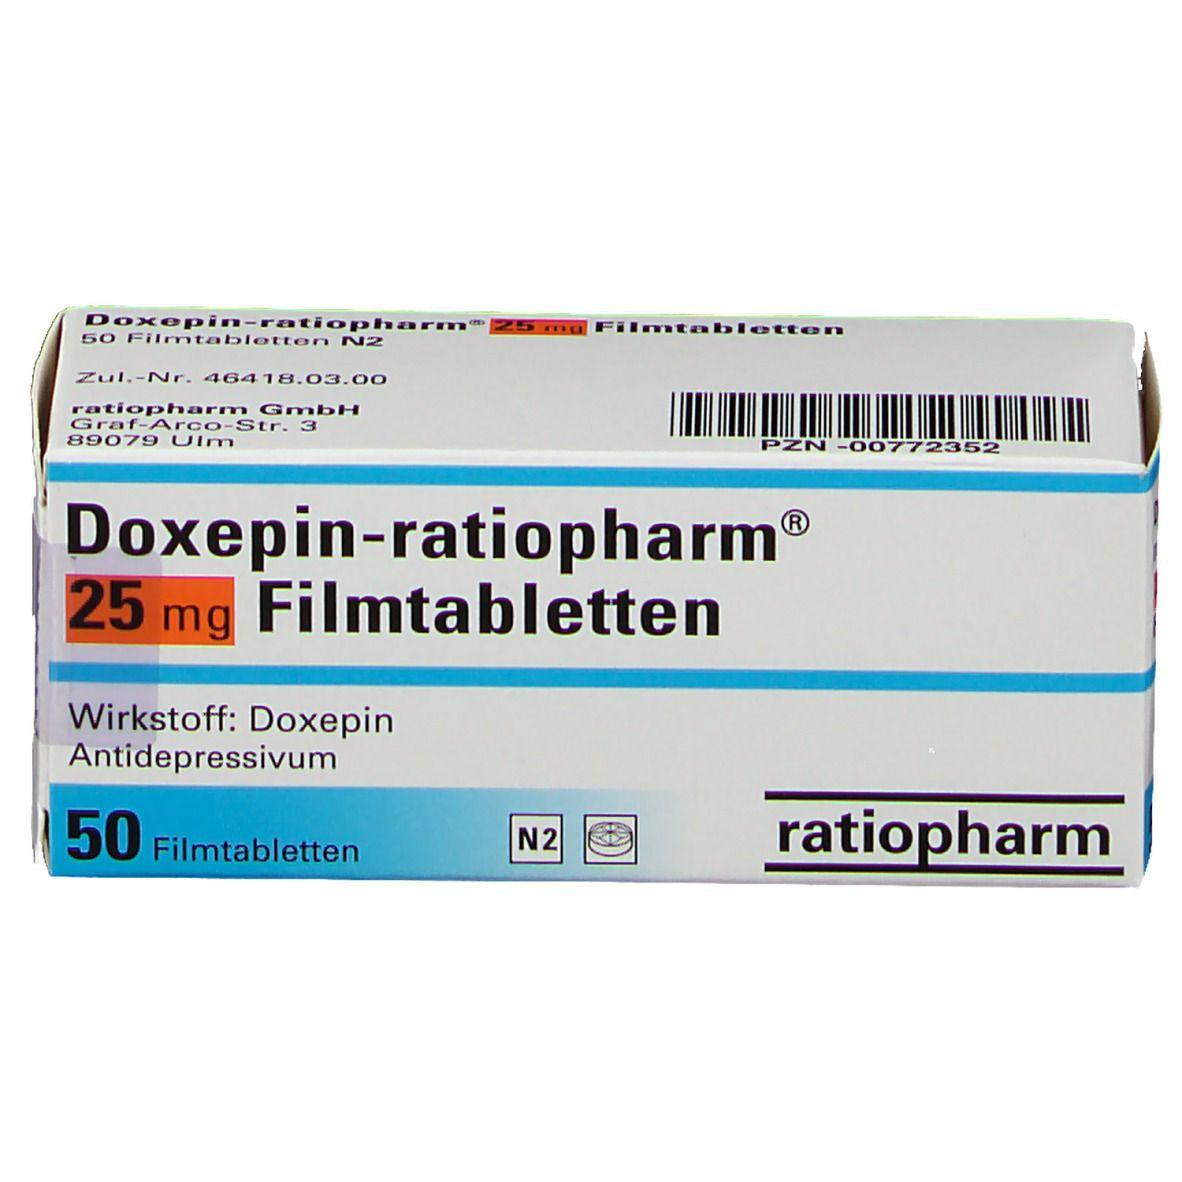 Doxepin-ratiopharm® 25 mg